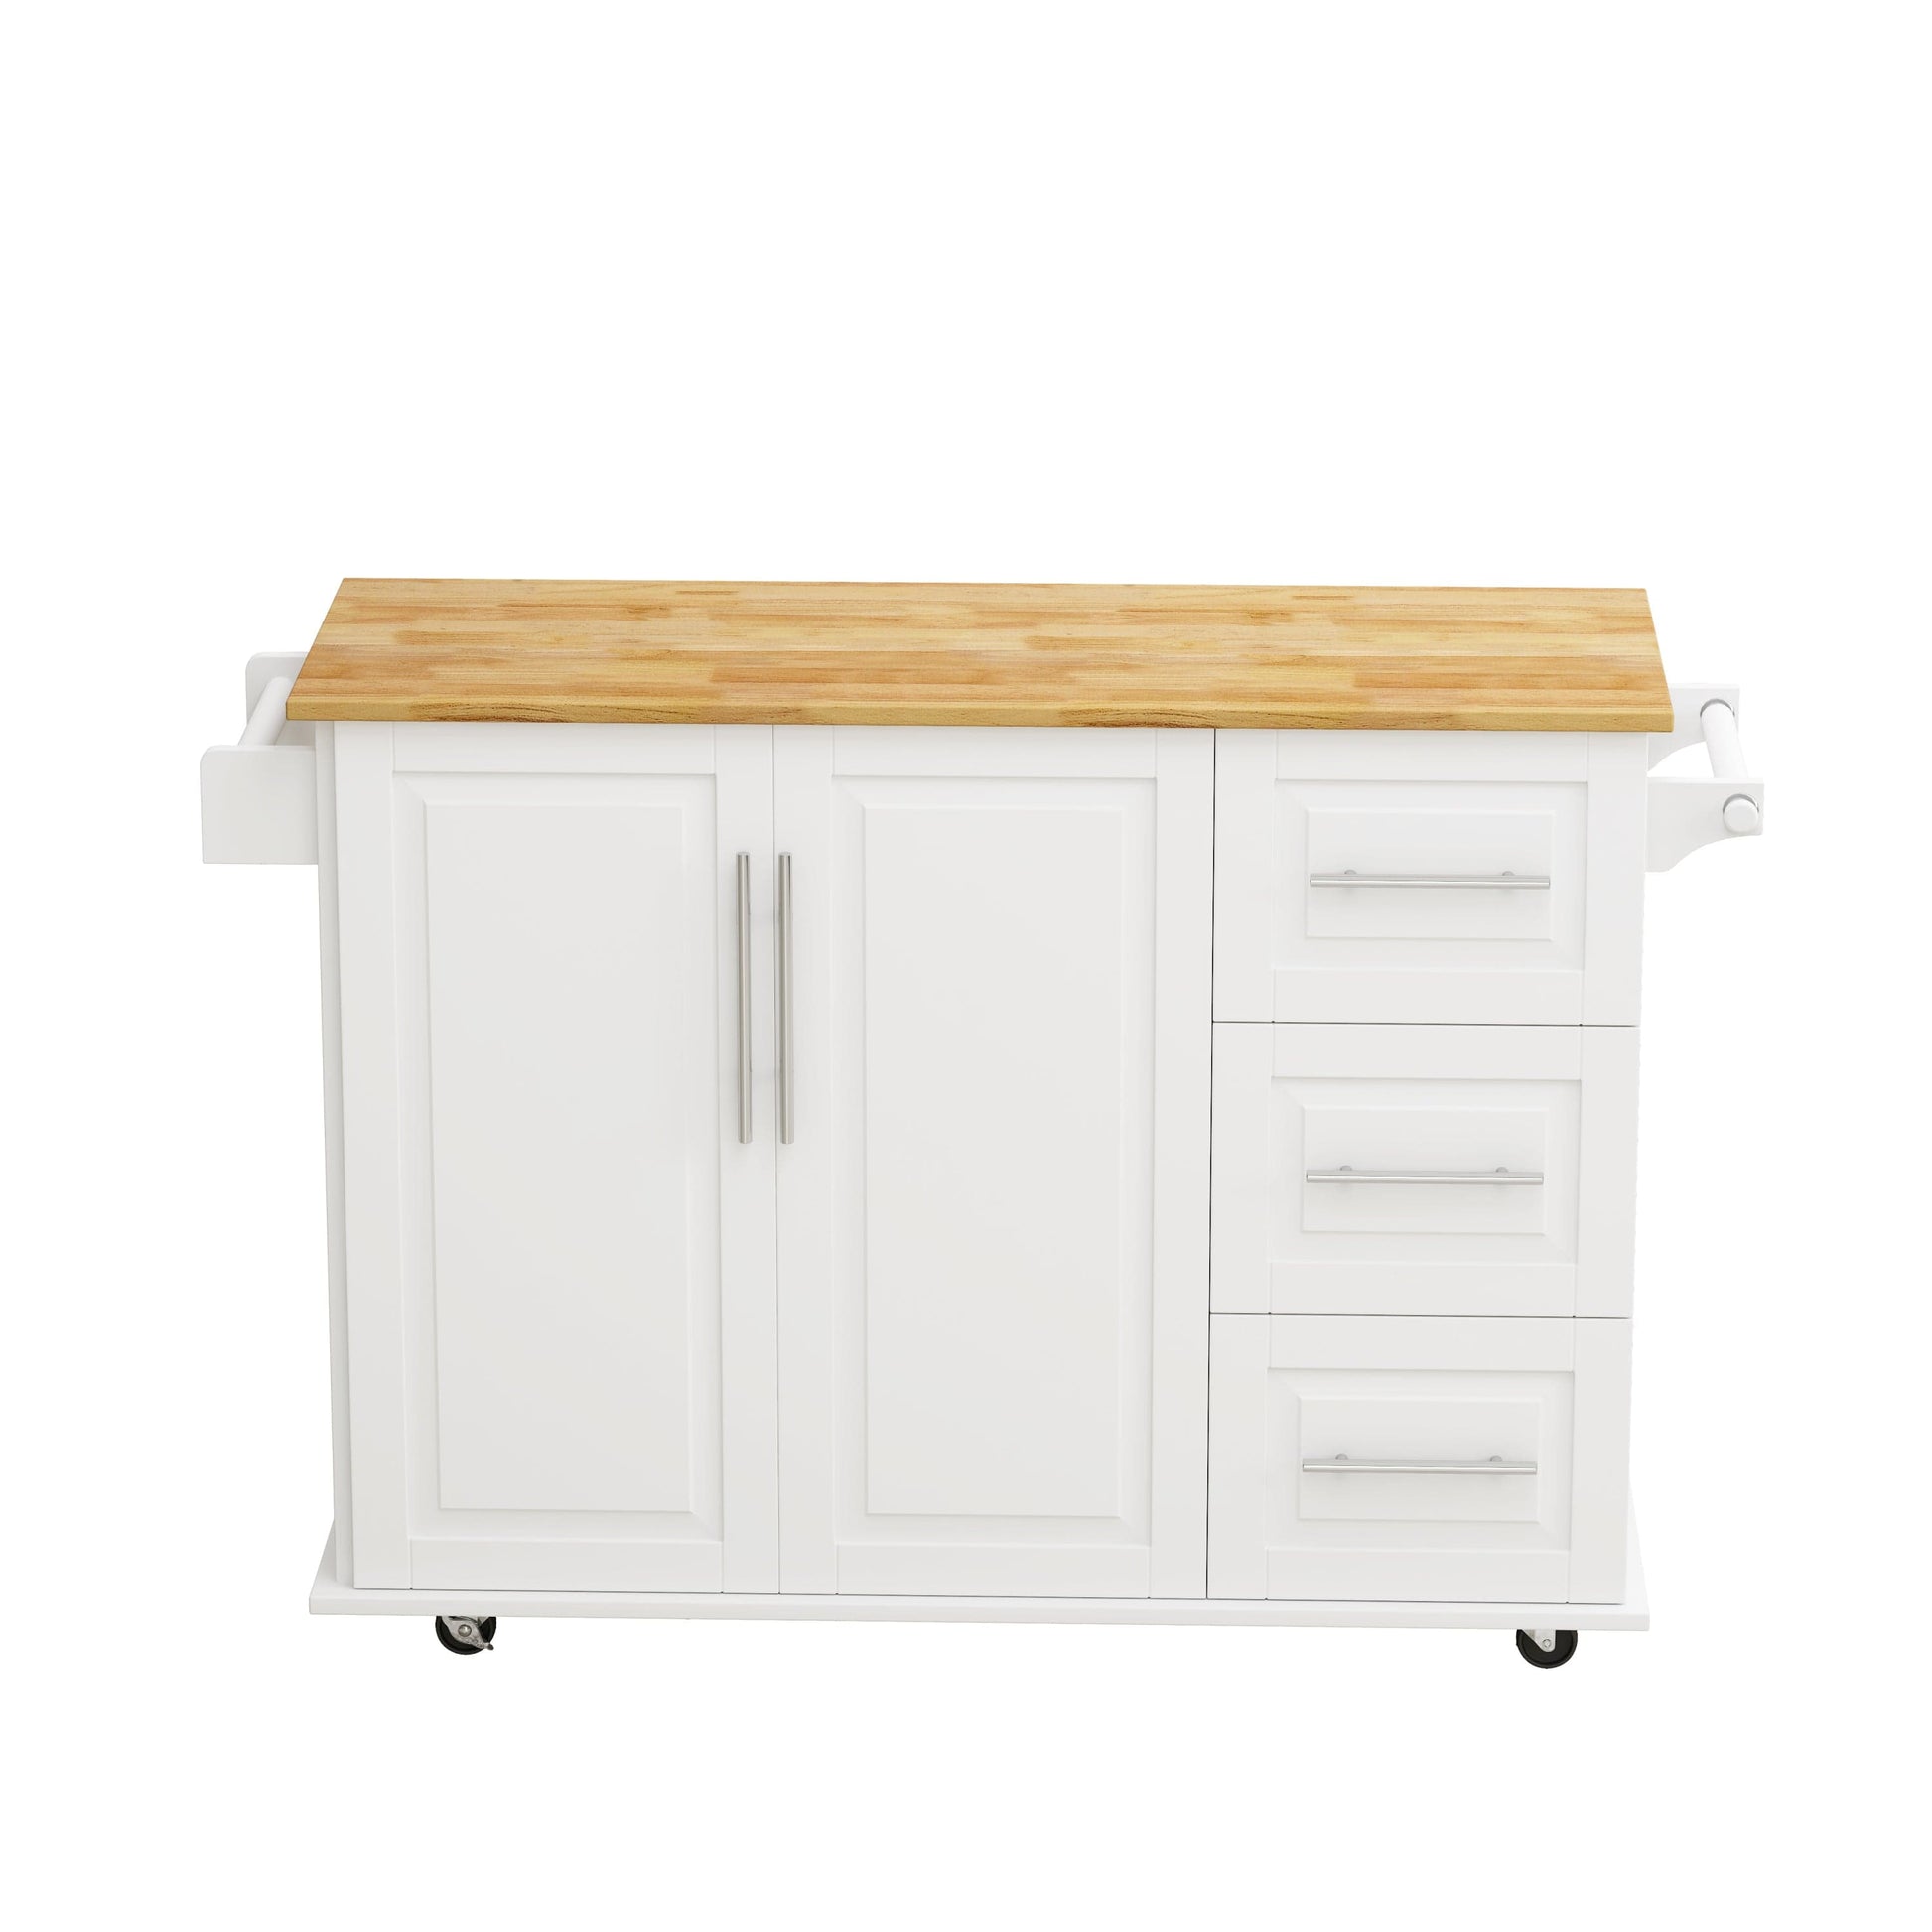 1st Choice Furniture Direct Kitchen Island Cart 1st Choice Kitchen Storage with Our Stylish White Kitchen Island Cart